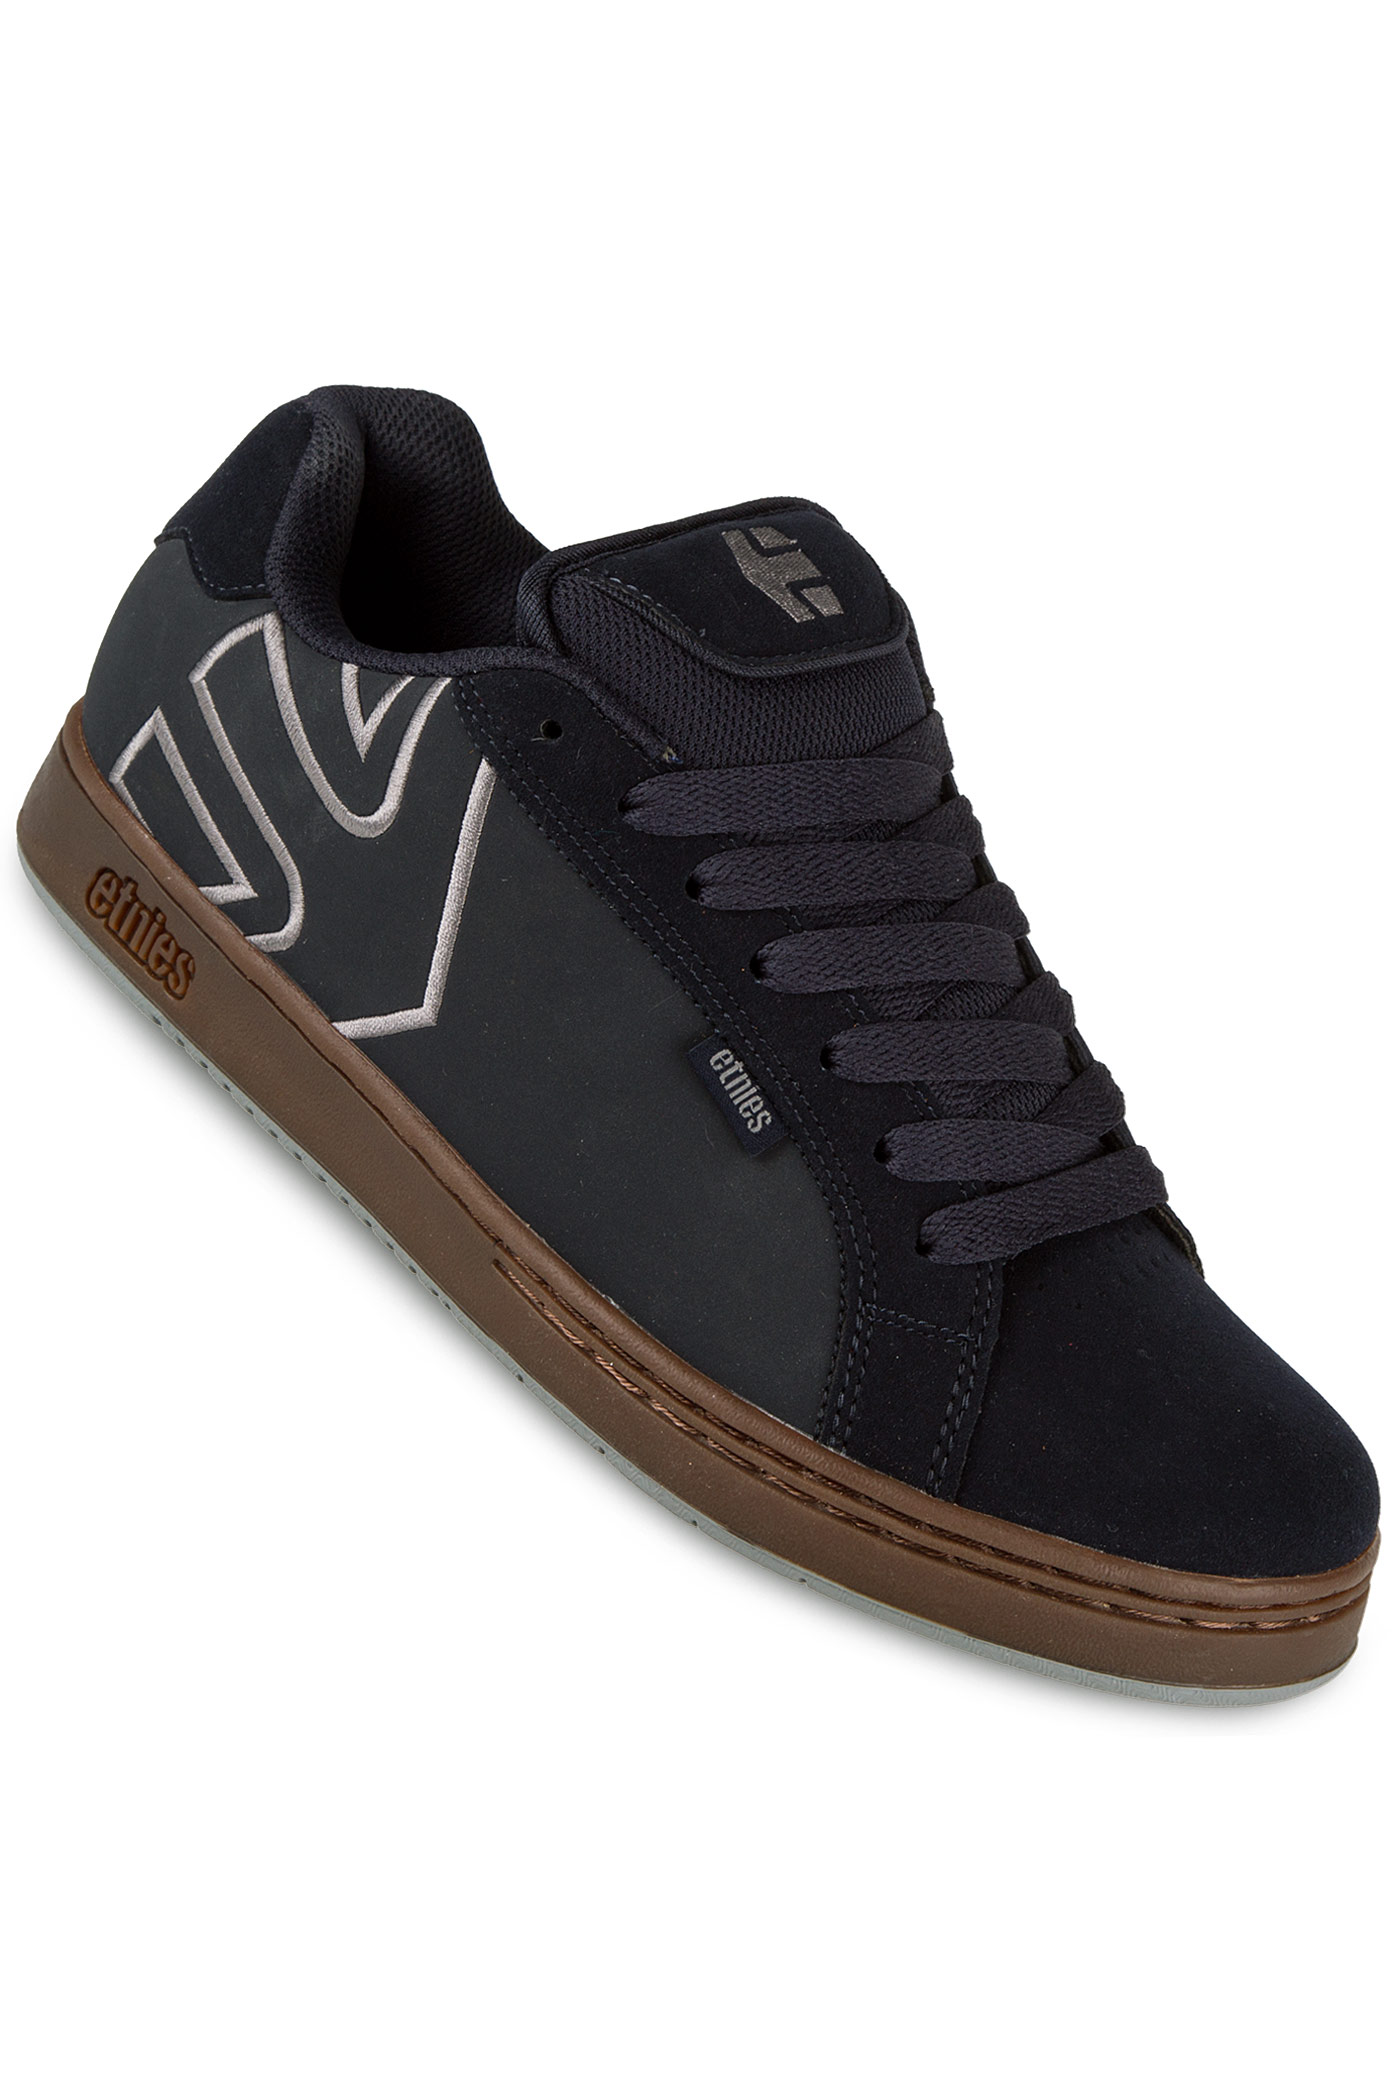 Etnies Fader Shoes (navy gum) buy at skatedeluxe